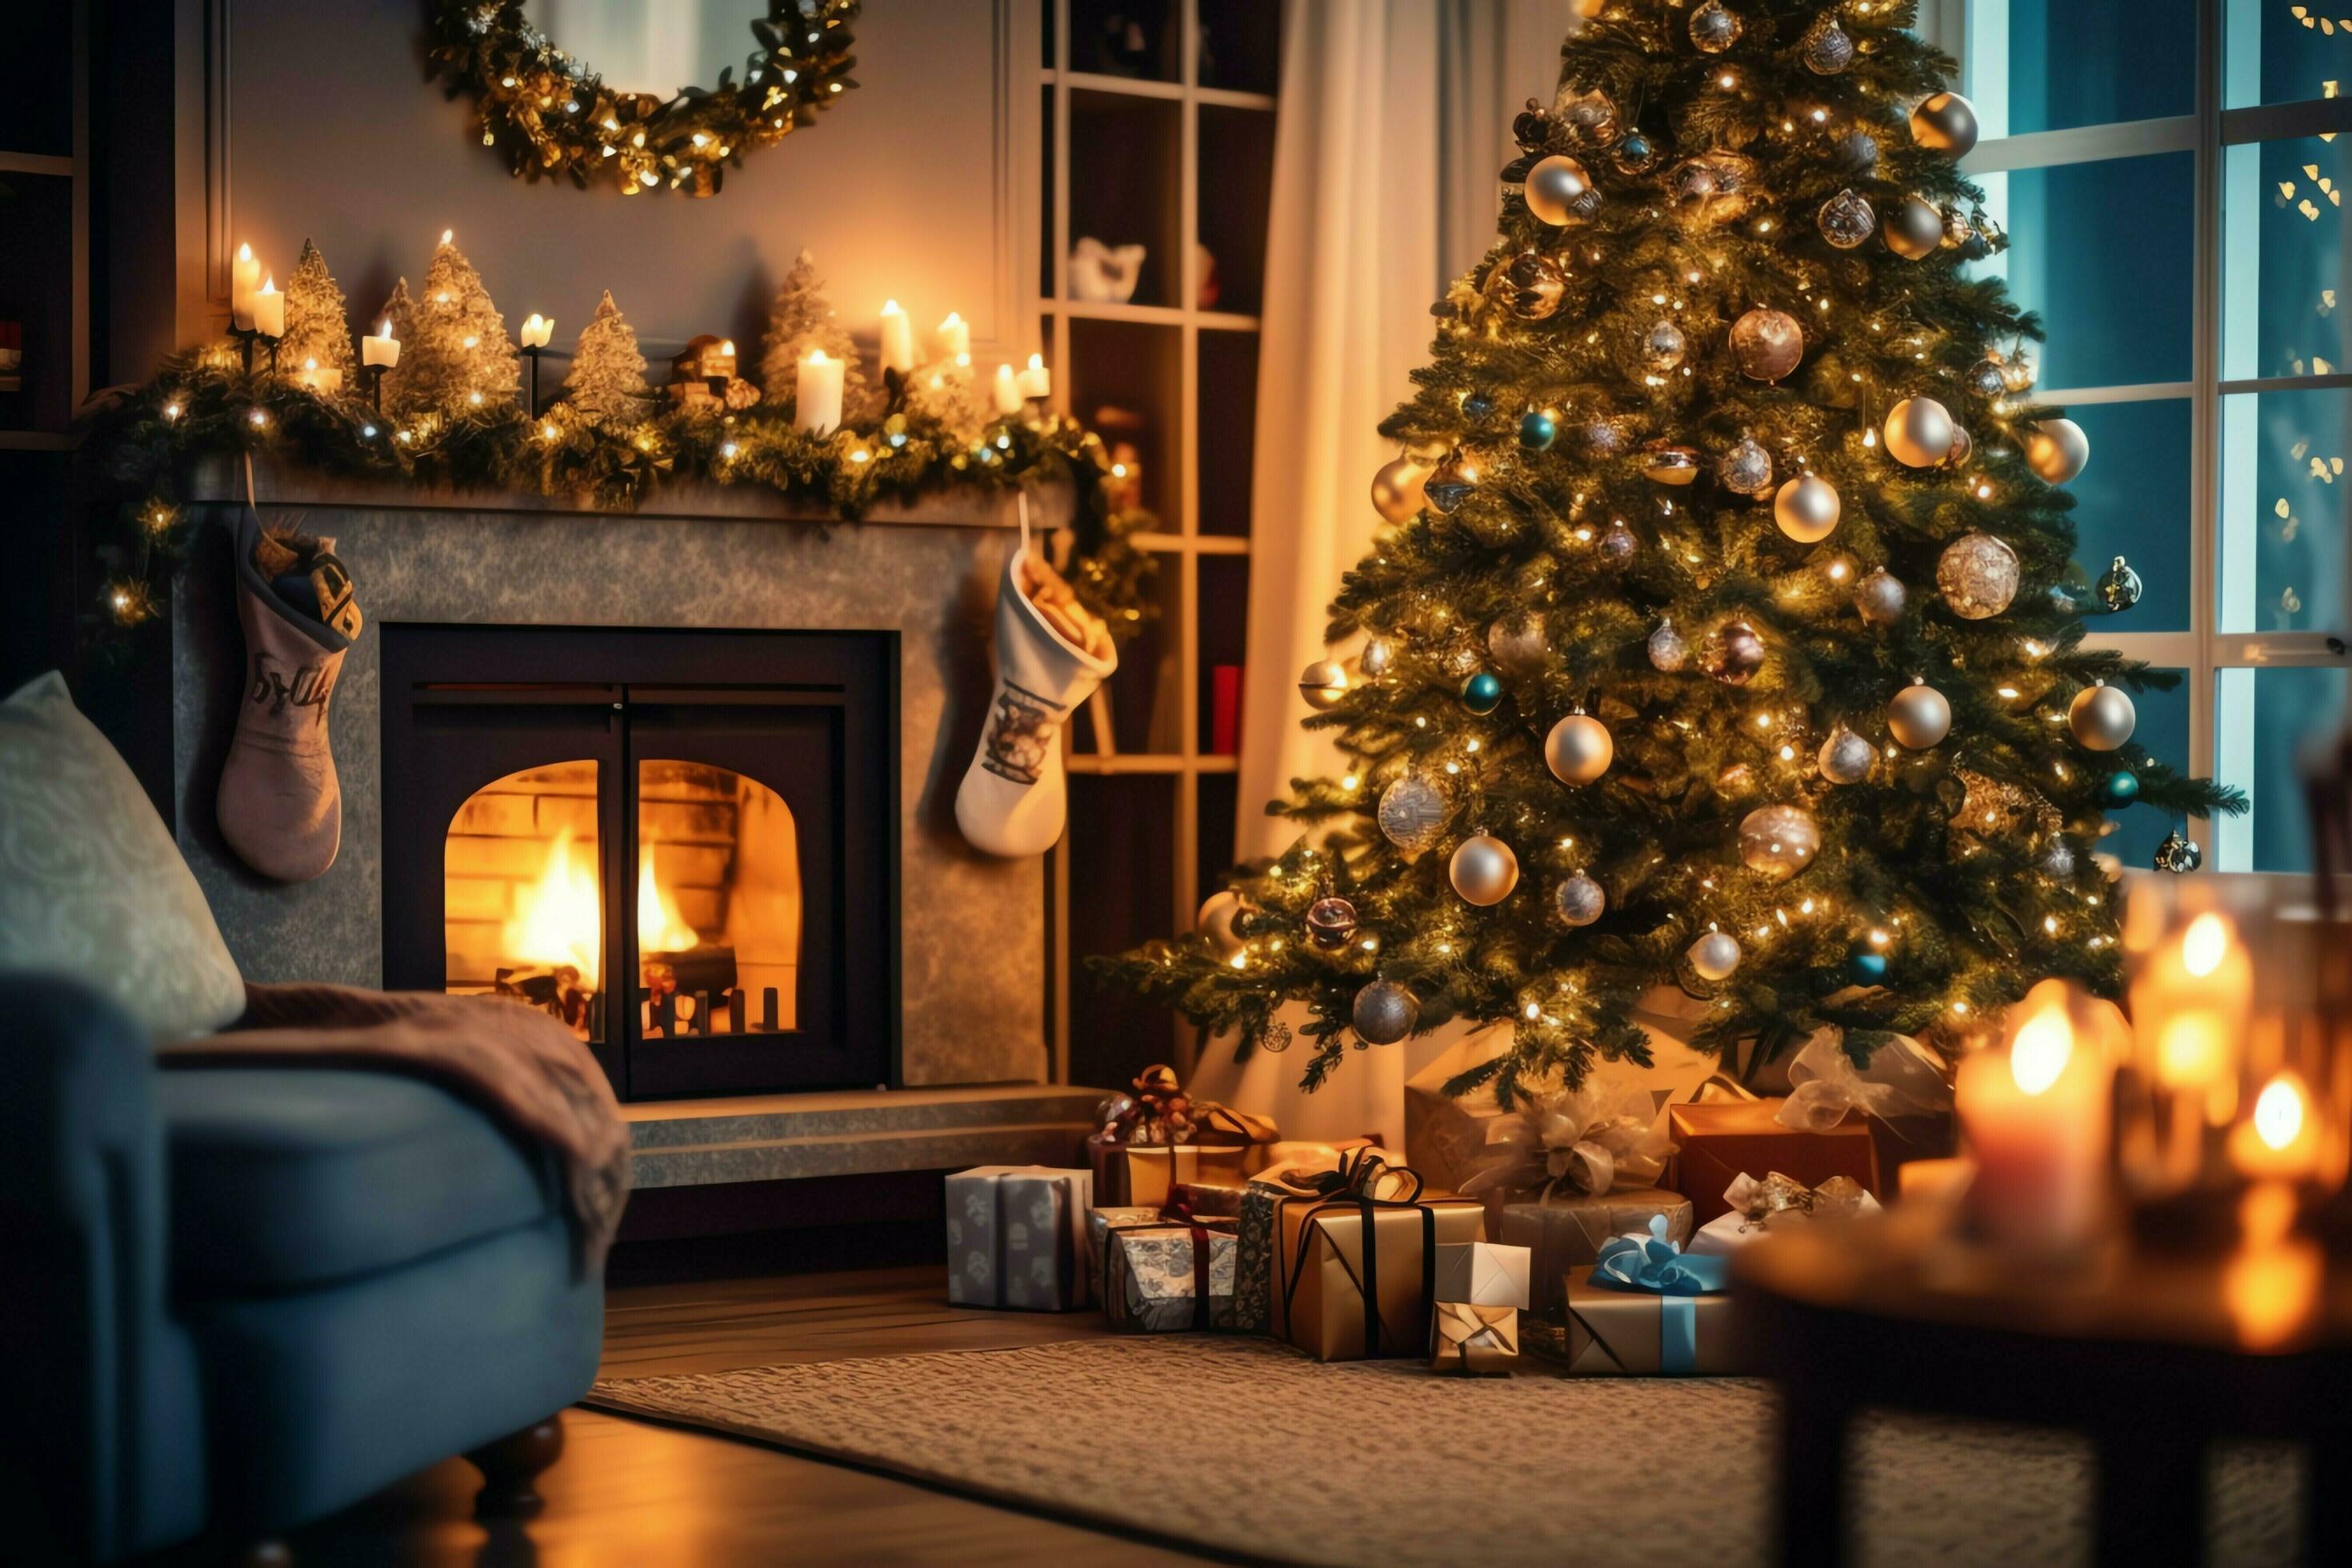 Fireplace And Beautiful Christmas Tree